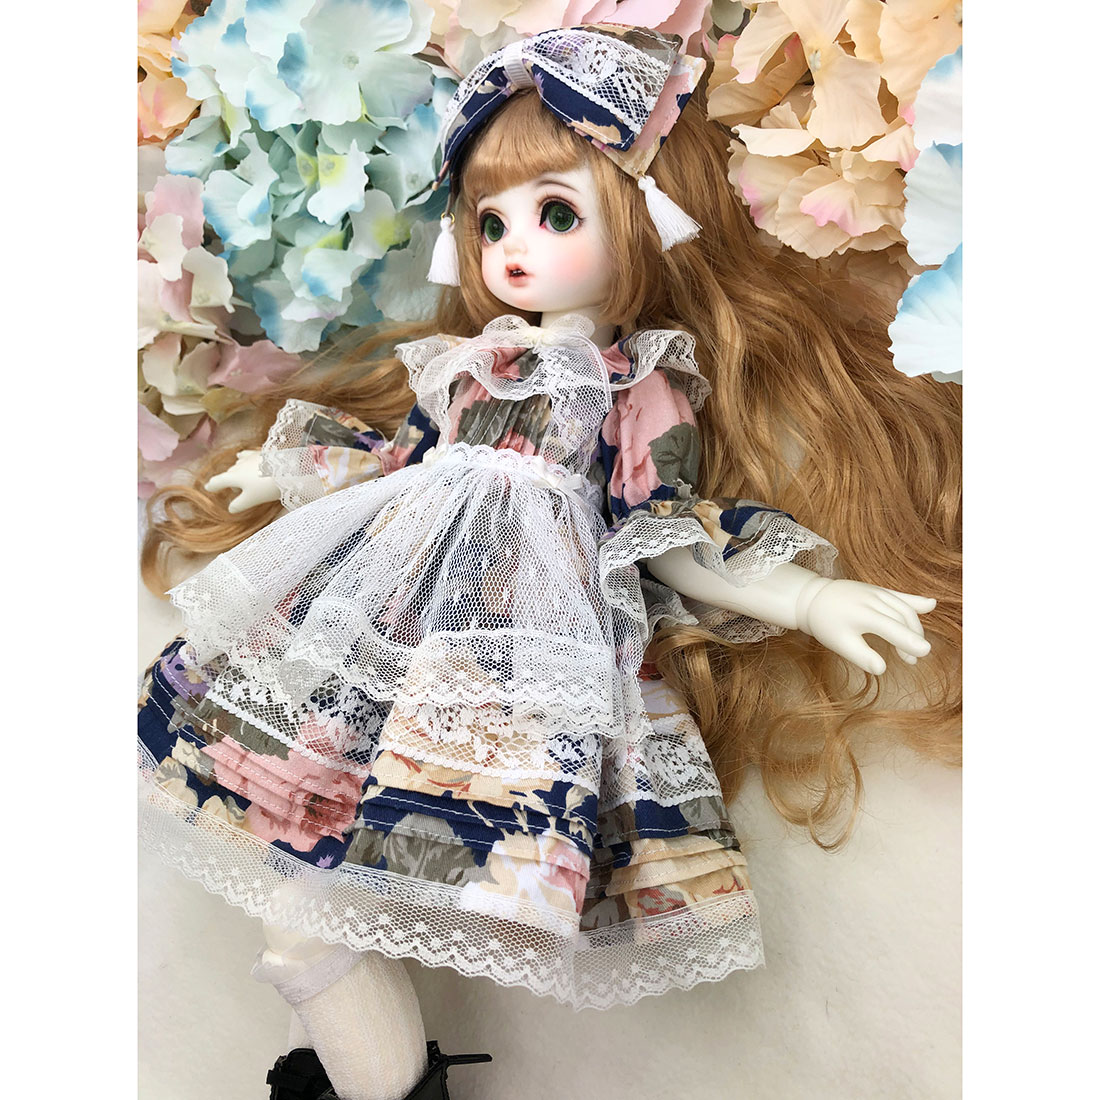 modikerbjd Pastoral Style Floral Skirt Clothes Set for 1/4 BJD Dolls - (No Doll) Purplish Blue Flower